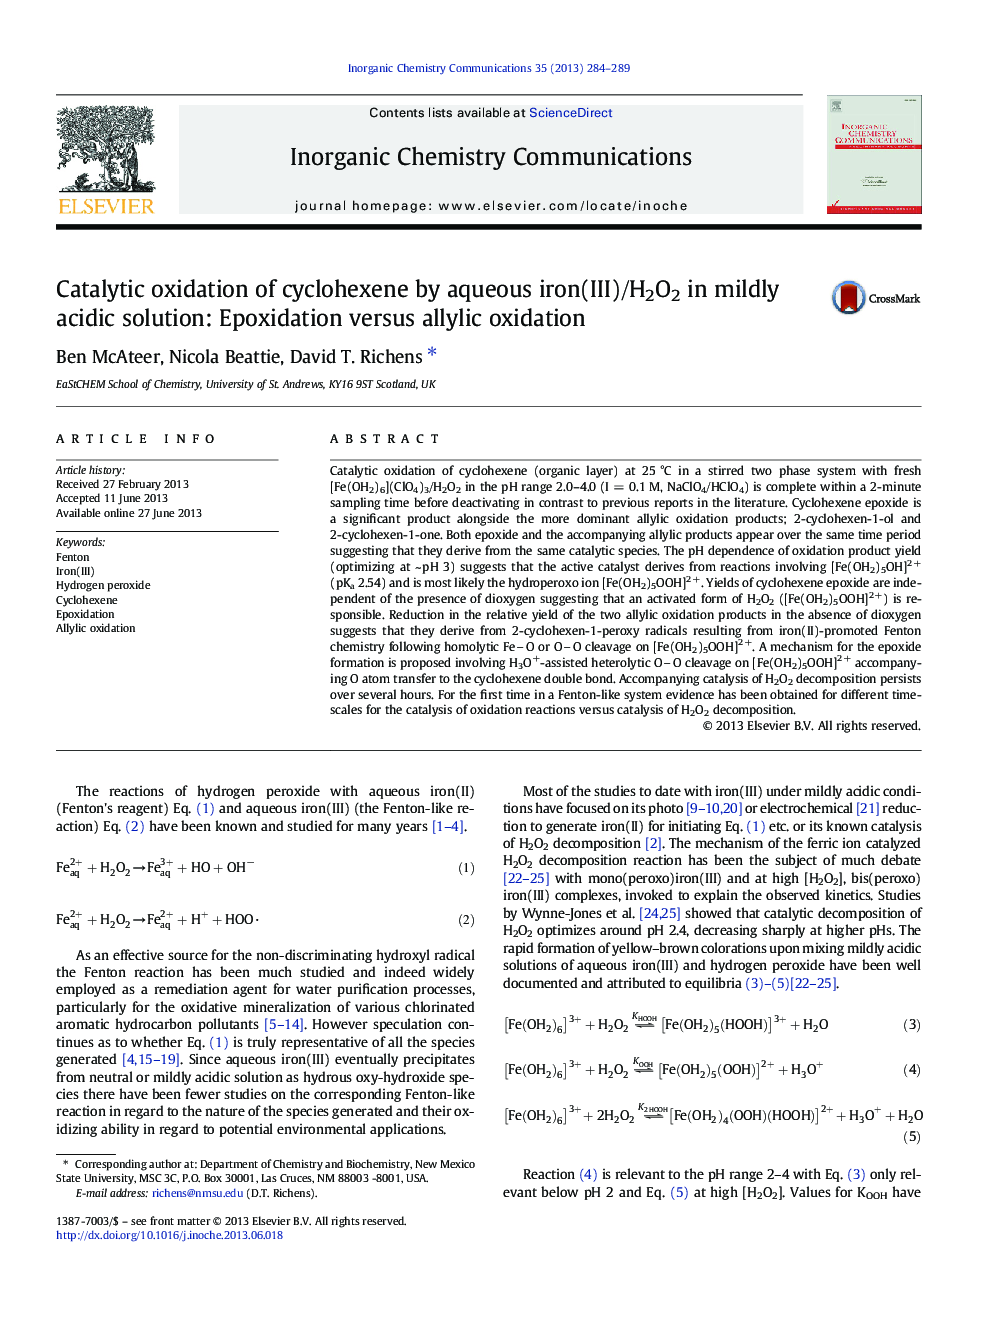 Catalytic oxidation of cyclohexene by aqueous iron(III)/H2O2 in mildly acidic solution: Epoxidation versus allylic oxidation